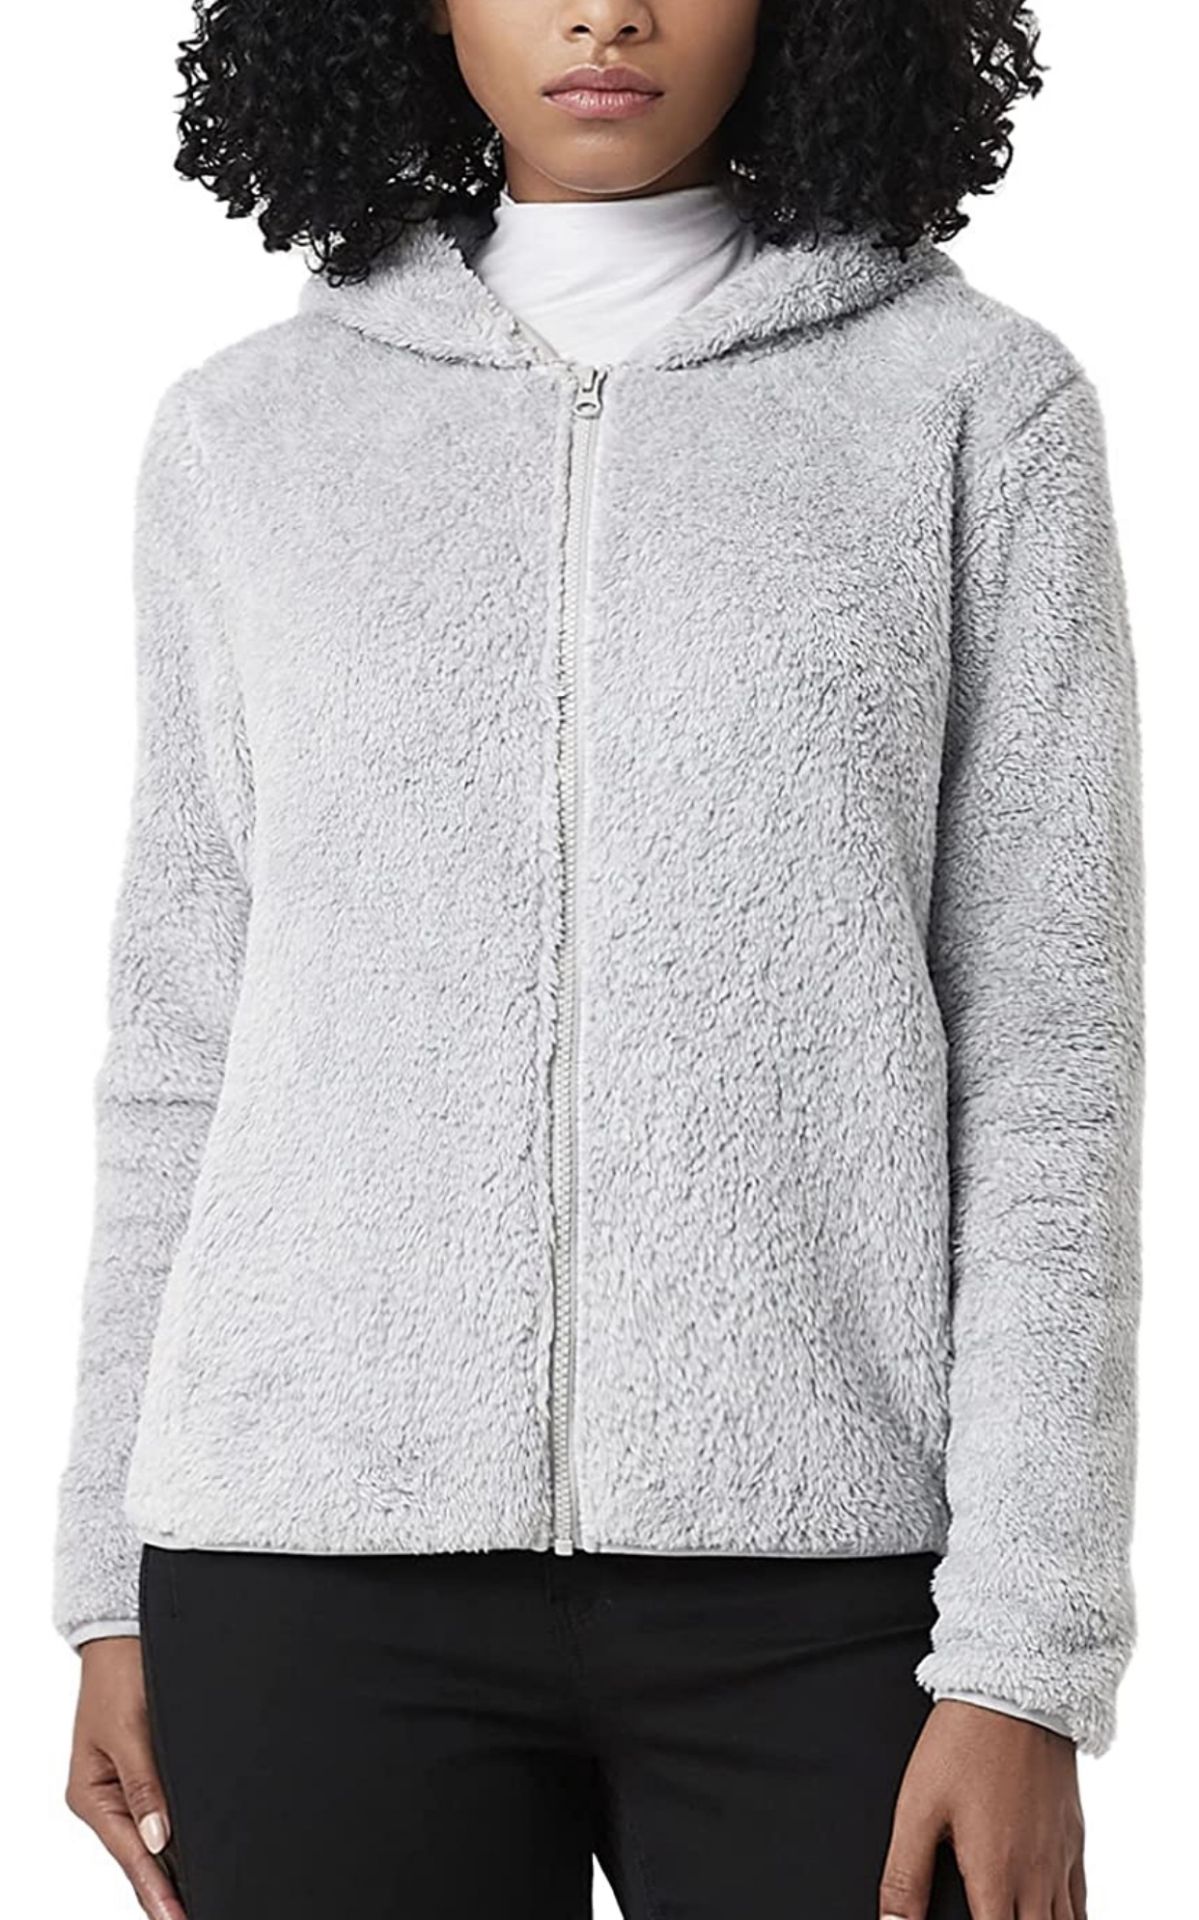 RRP £27.99 Lapasa Women's Anti-Static Polar Fleece Lightweight Jacket, Medium